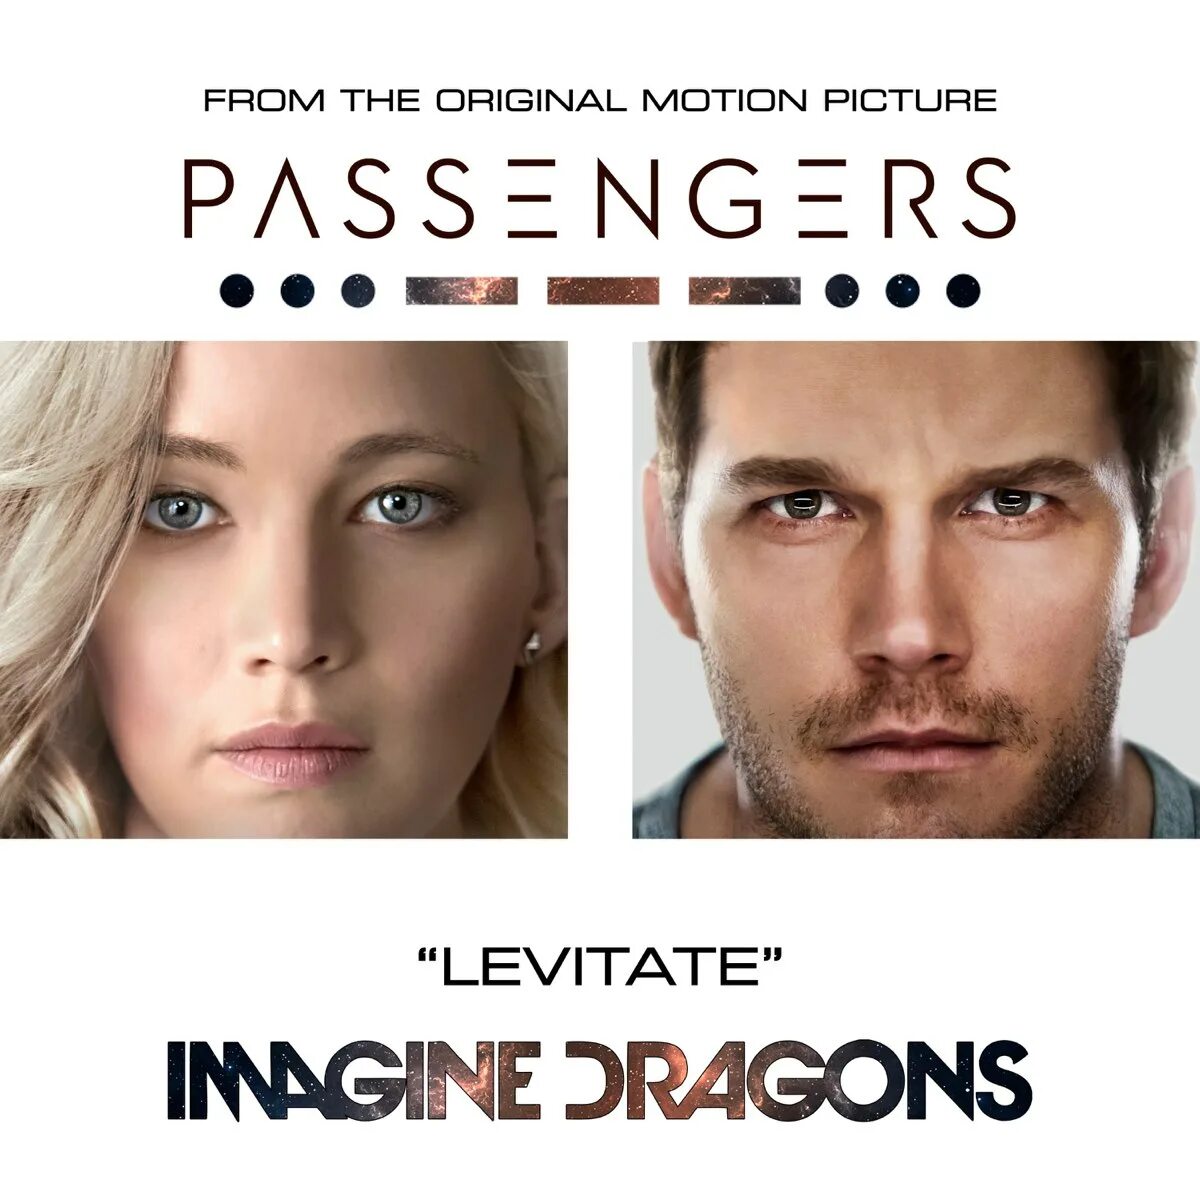 Levitate imagine Dragons. Пассажиры OST. Imagine Dragons 2016. Пассажиры 2016 саундтрек. Саундтрек к фильму пассажиры